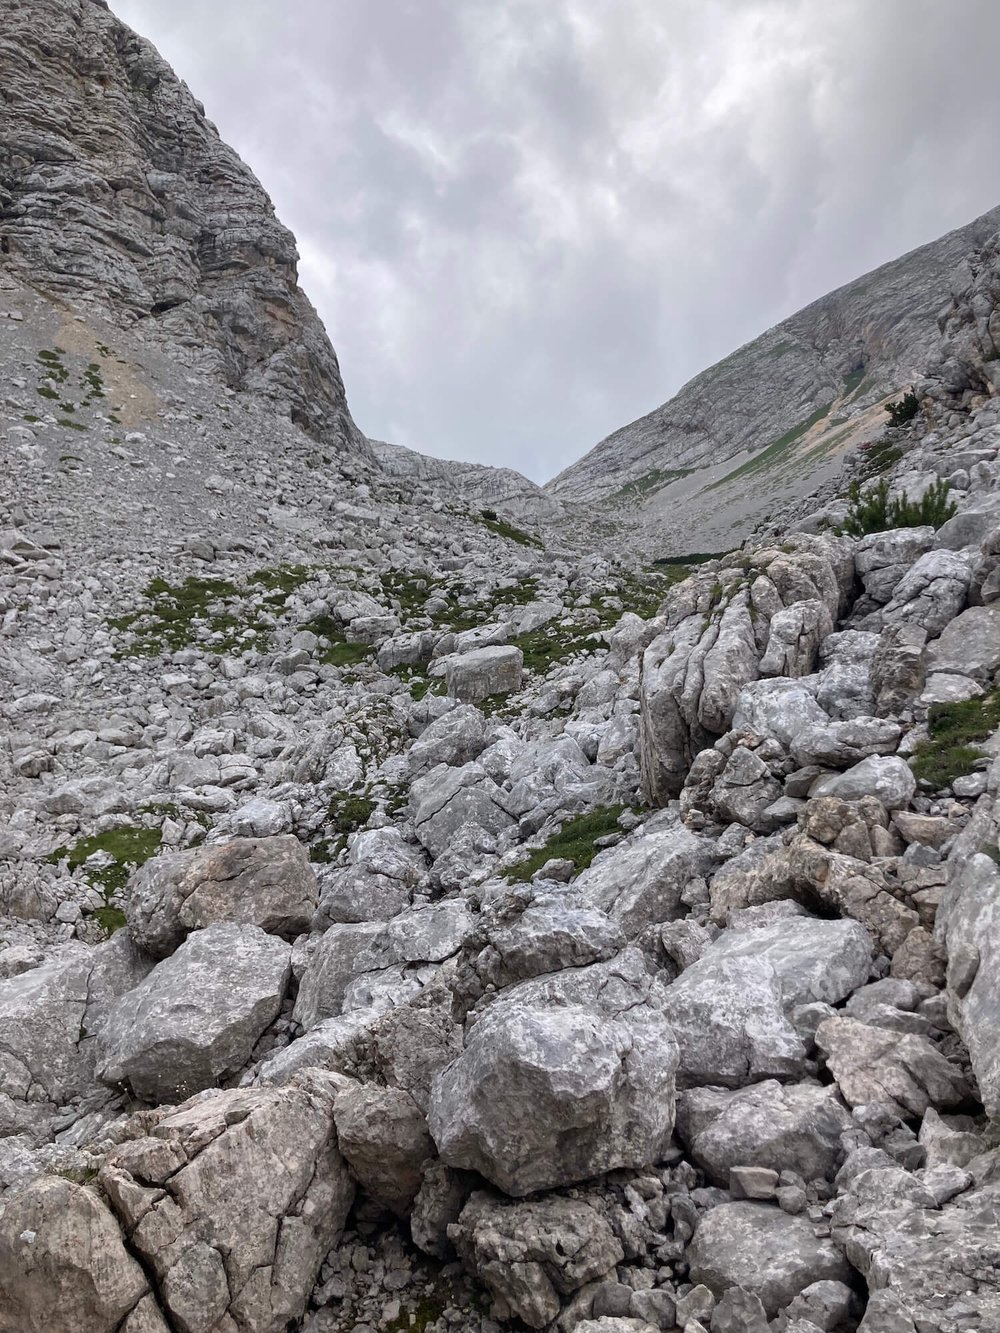 Boulderfield on ascent to Rifugio Biella (1).jpg